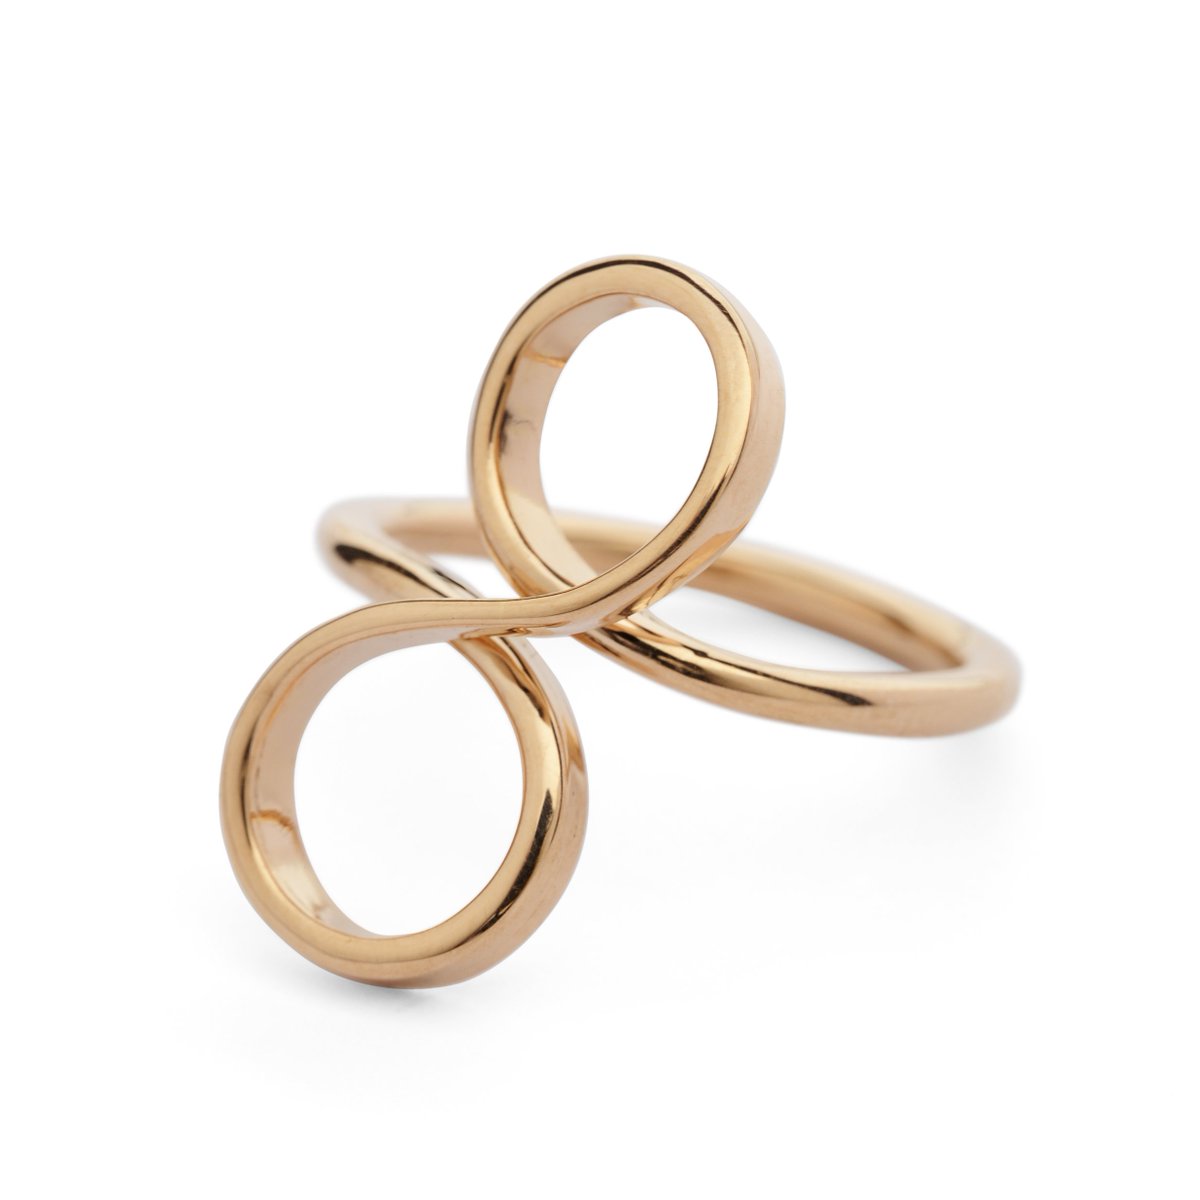 A light looping 18ct rose gold statement ring
#metalwork #handshaped #polishedfinish #rosegoldring #fingureofeight #infinity